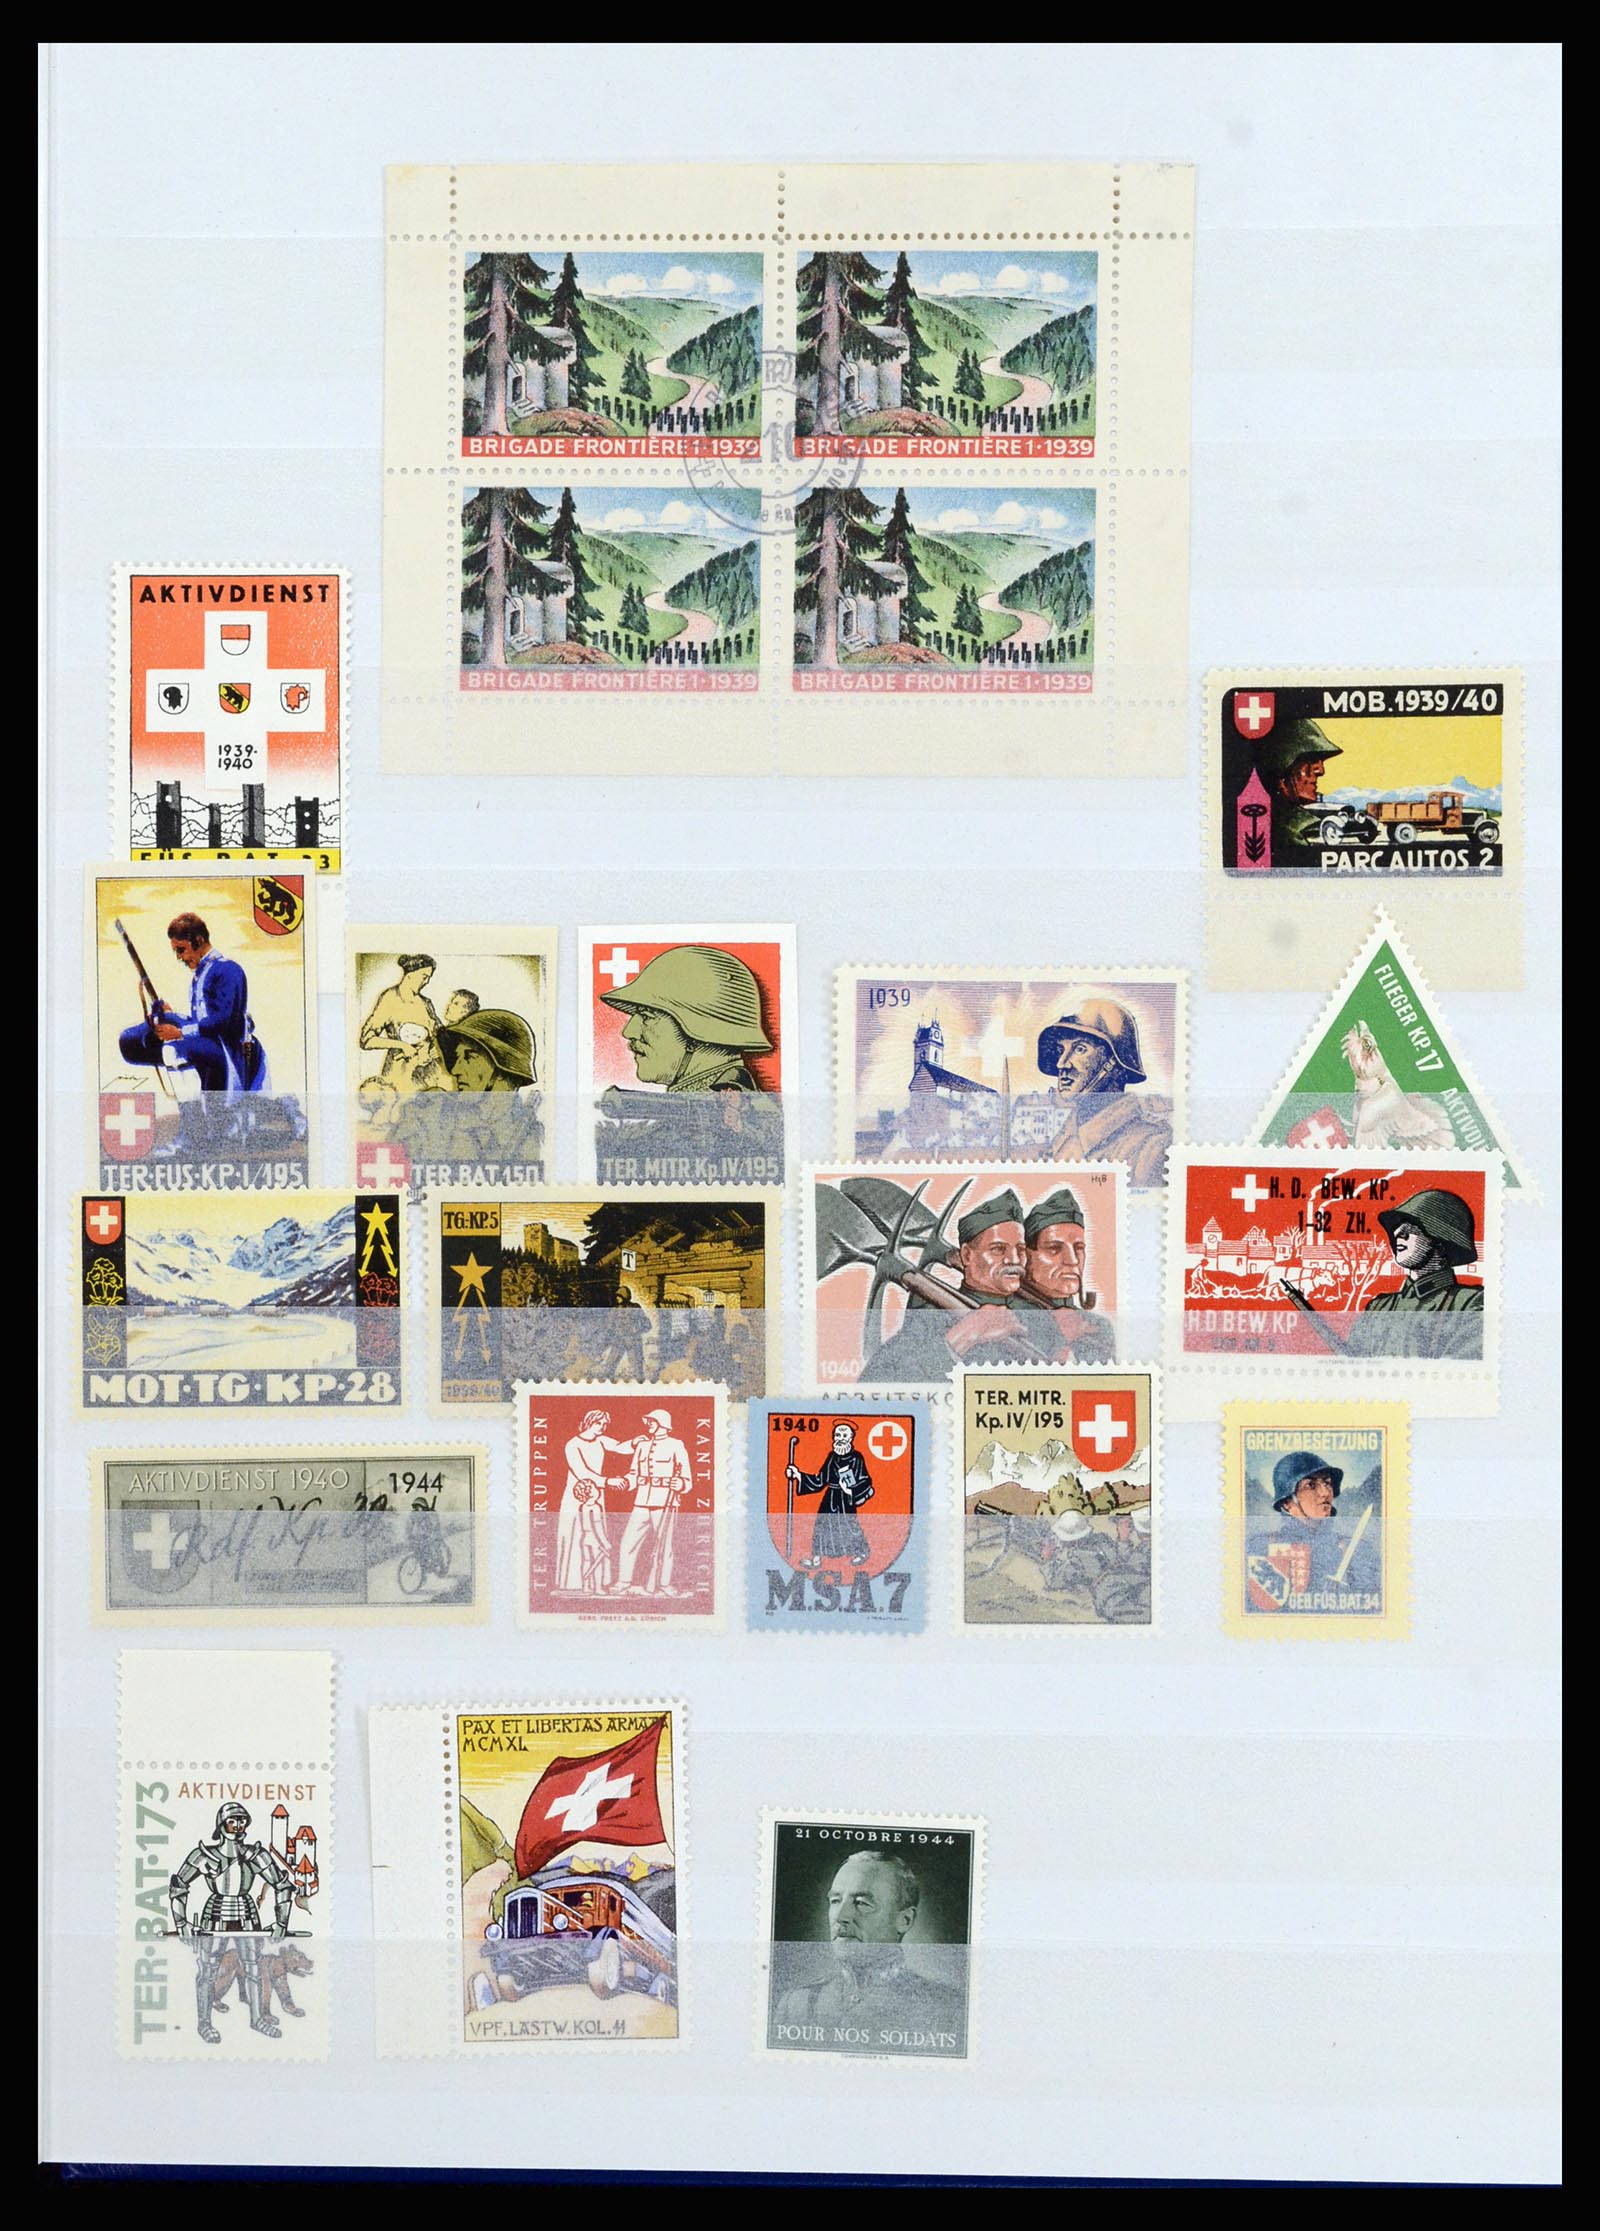 37149 023 - Stamp collection 37149 Switzerland soldier stamps 1914-1945.